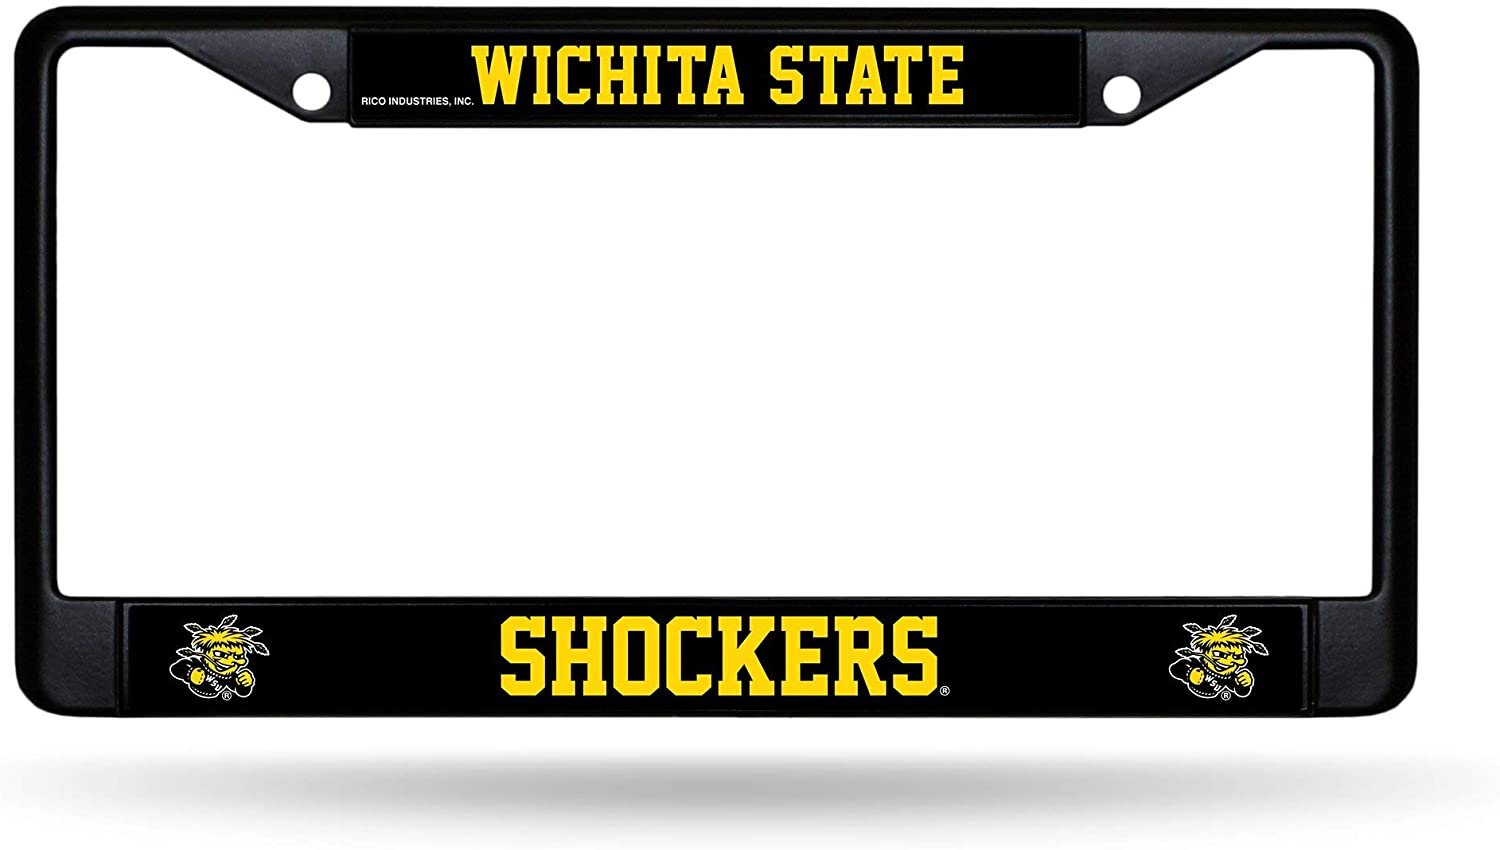 Wichita State University Shockers Black Metal License Plate Frame Chrome Tag Cover 6x12 Inch